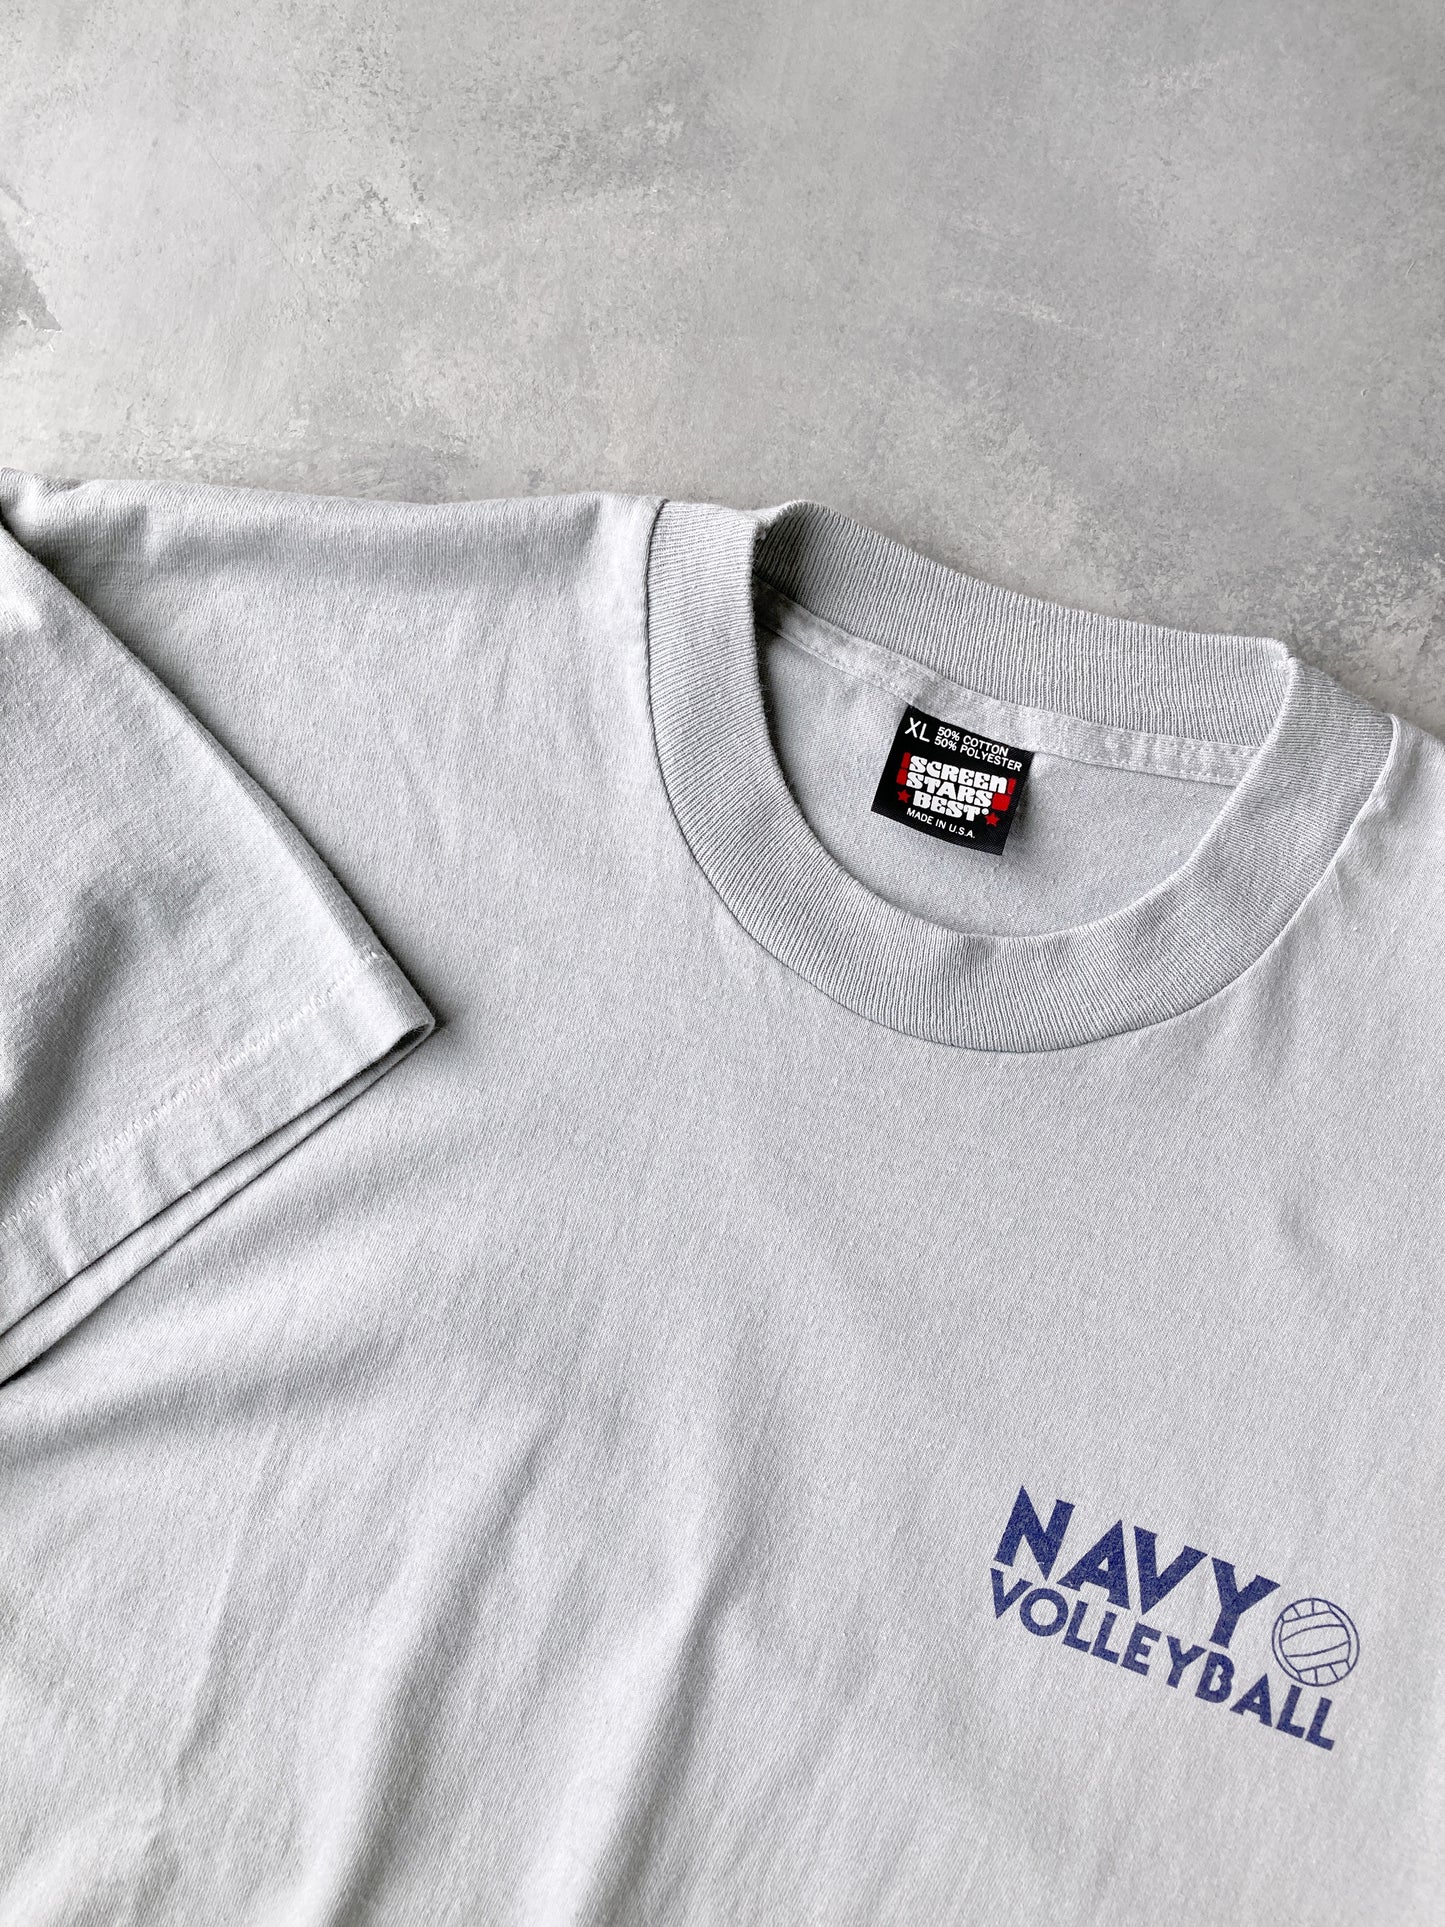 Navy Volleyball T-Shirt 90's - XL